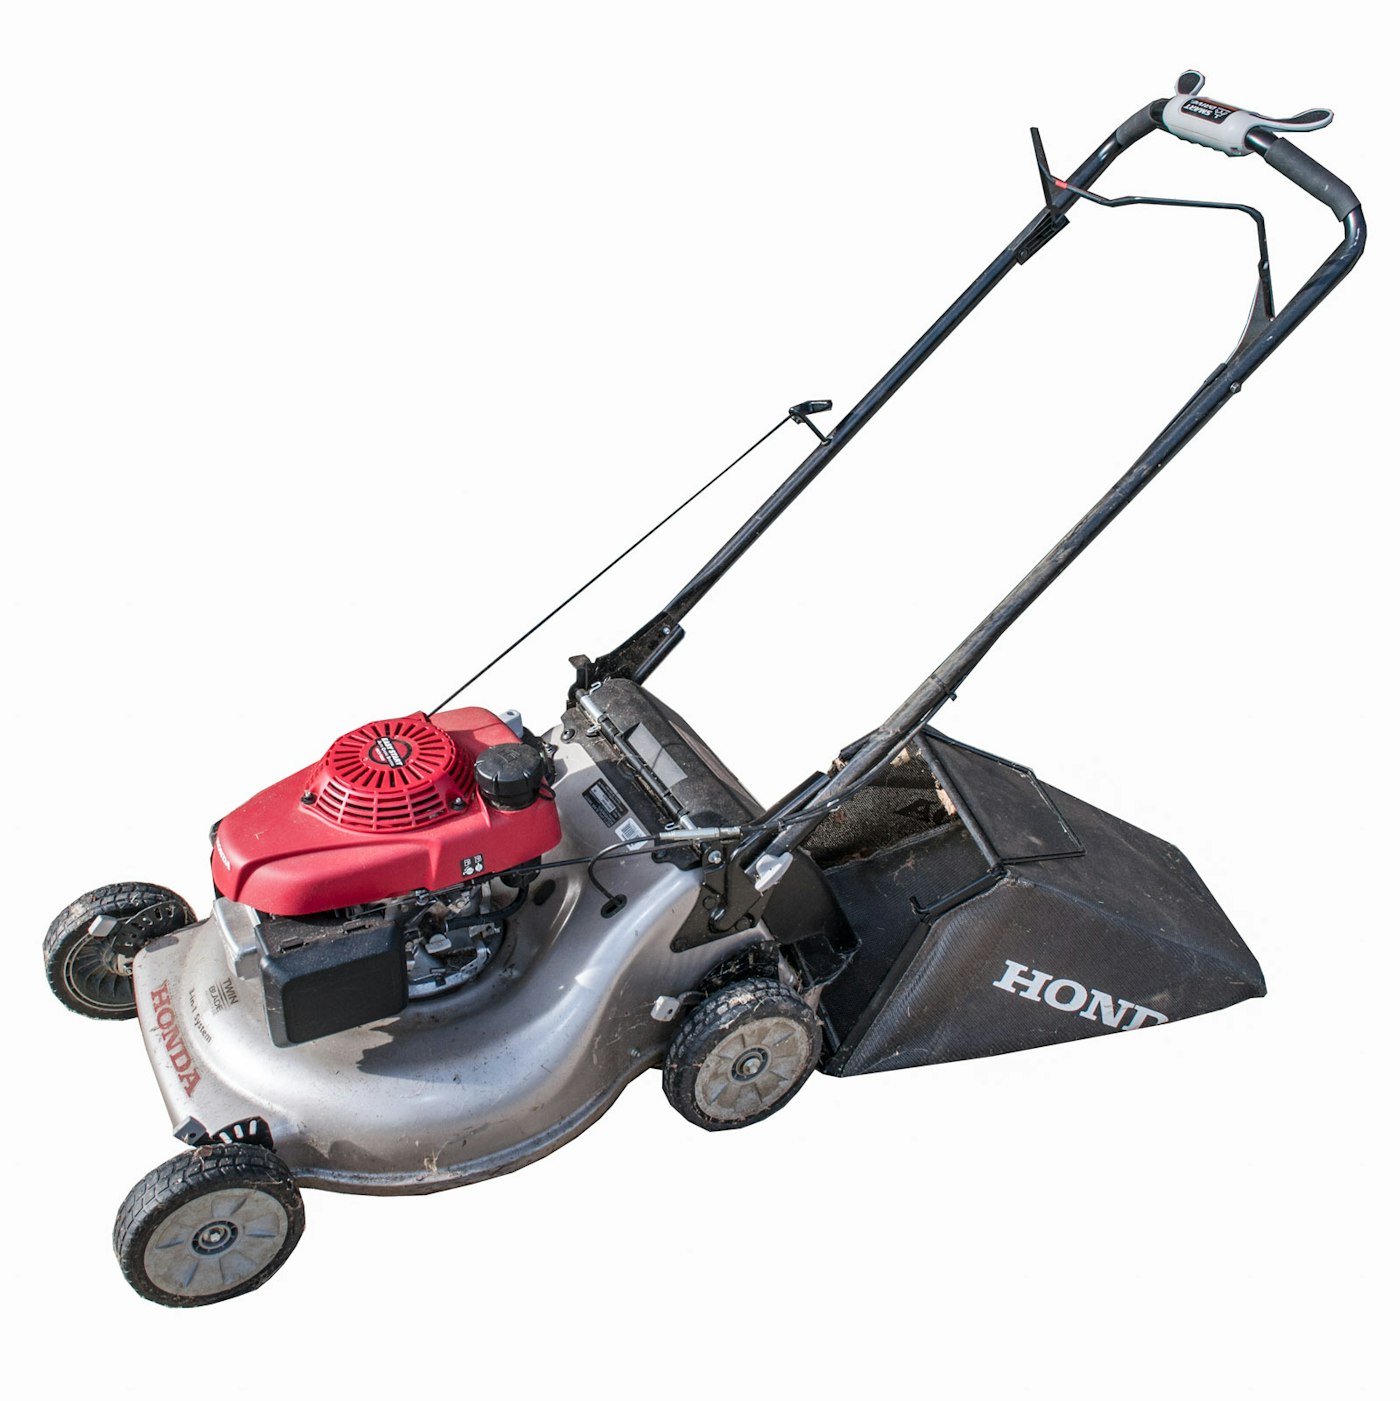 Honda GCV160 Lawn Mower EBTH